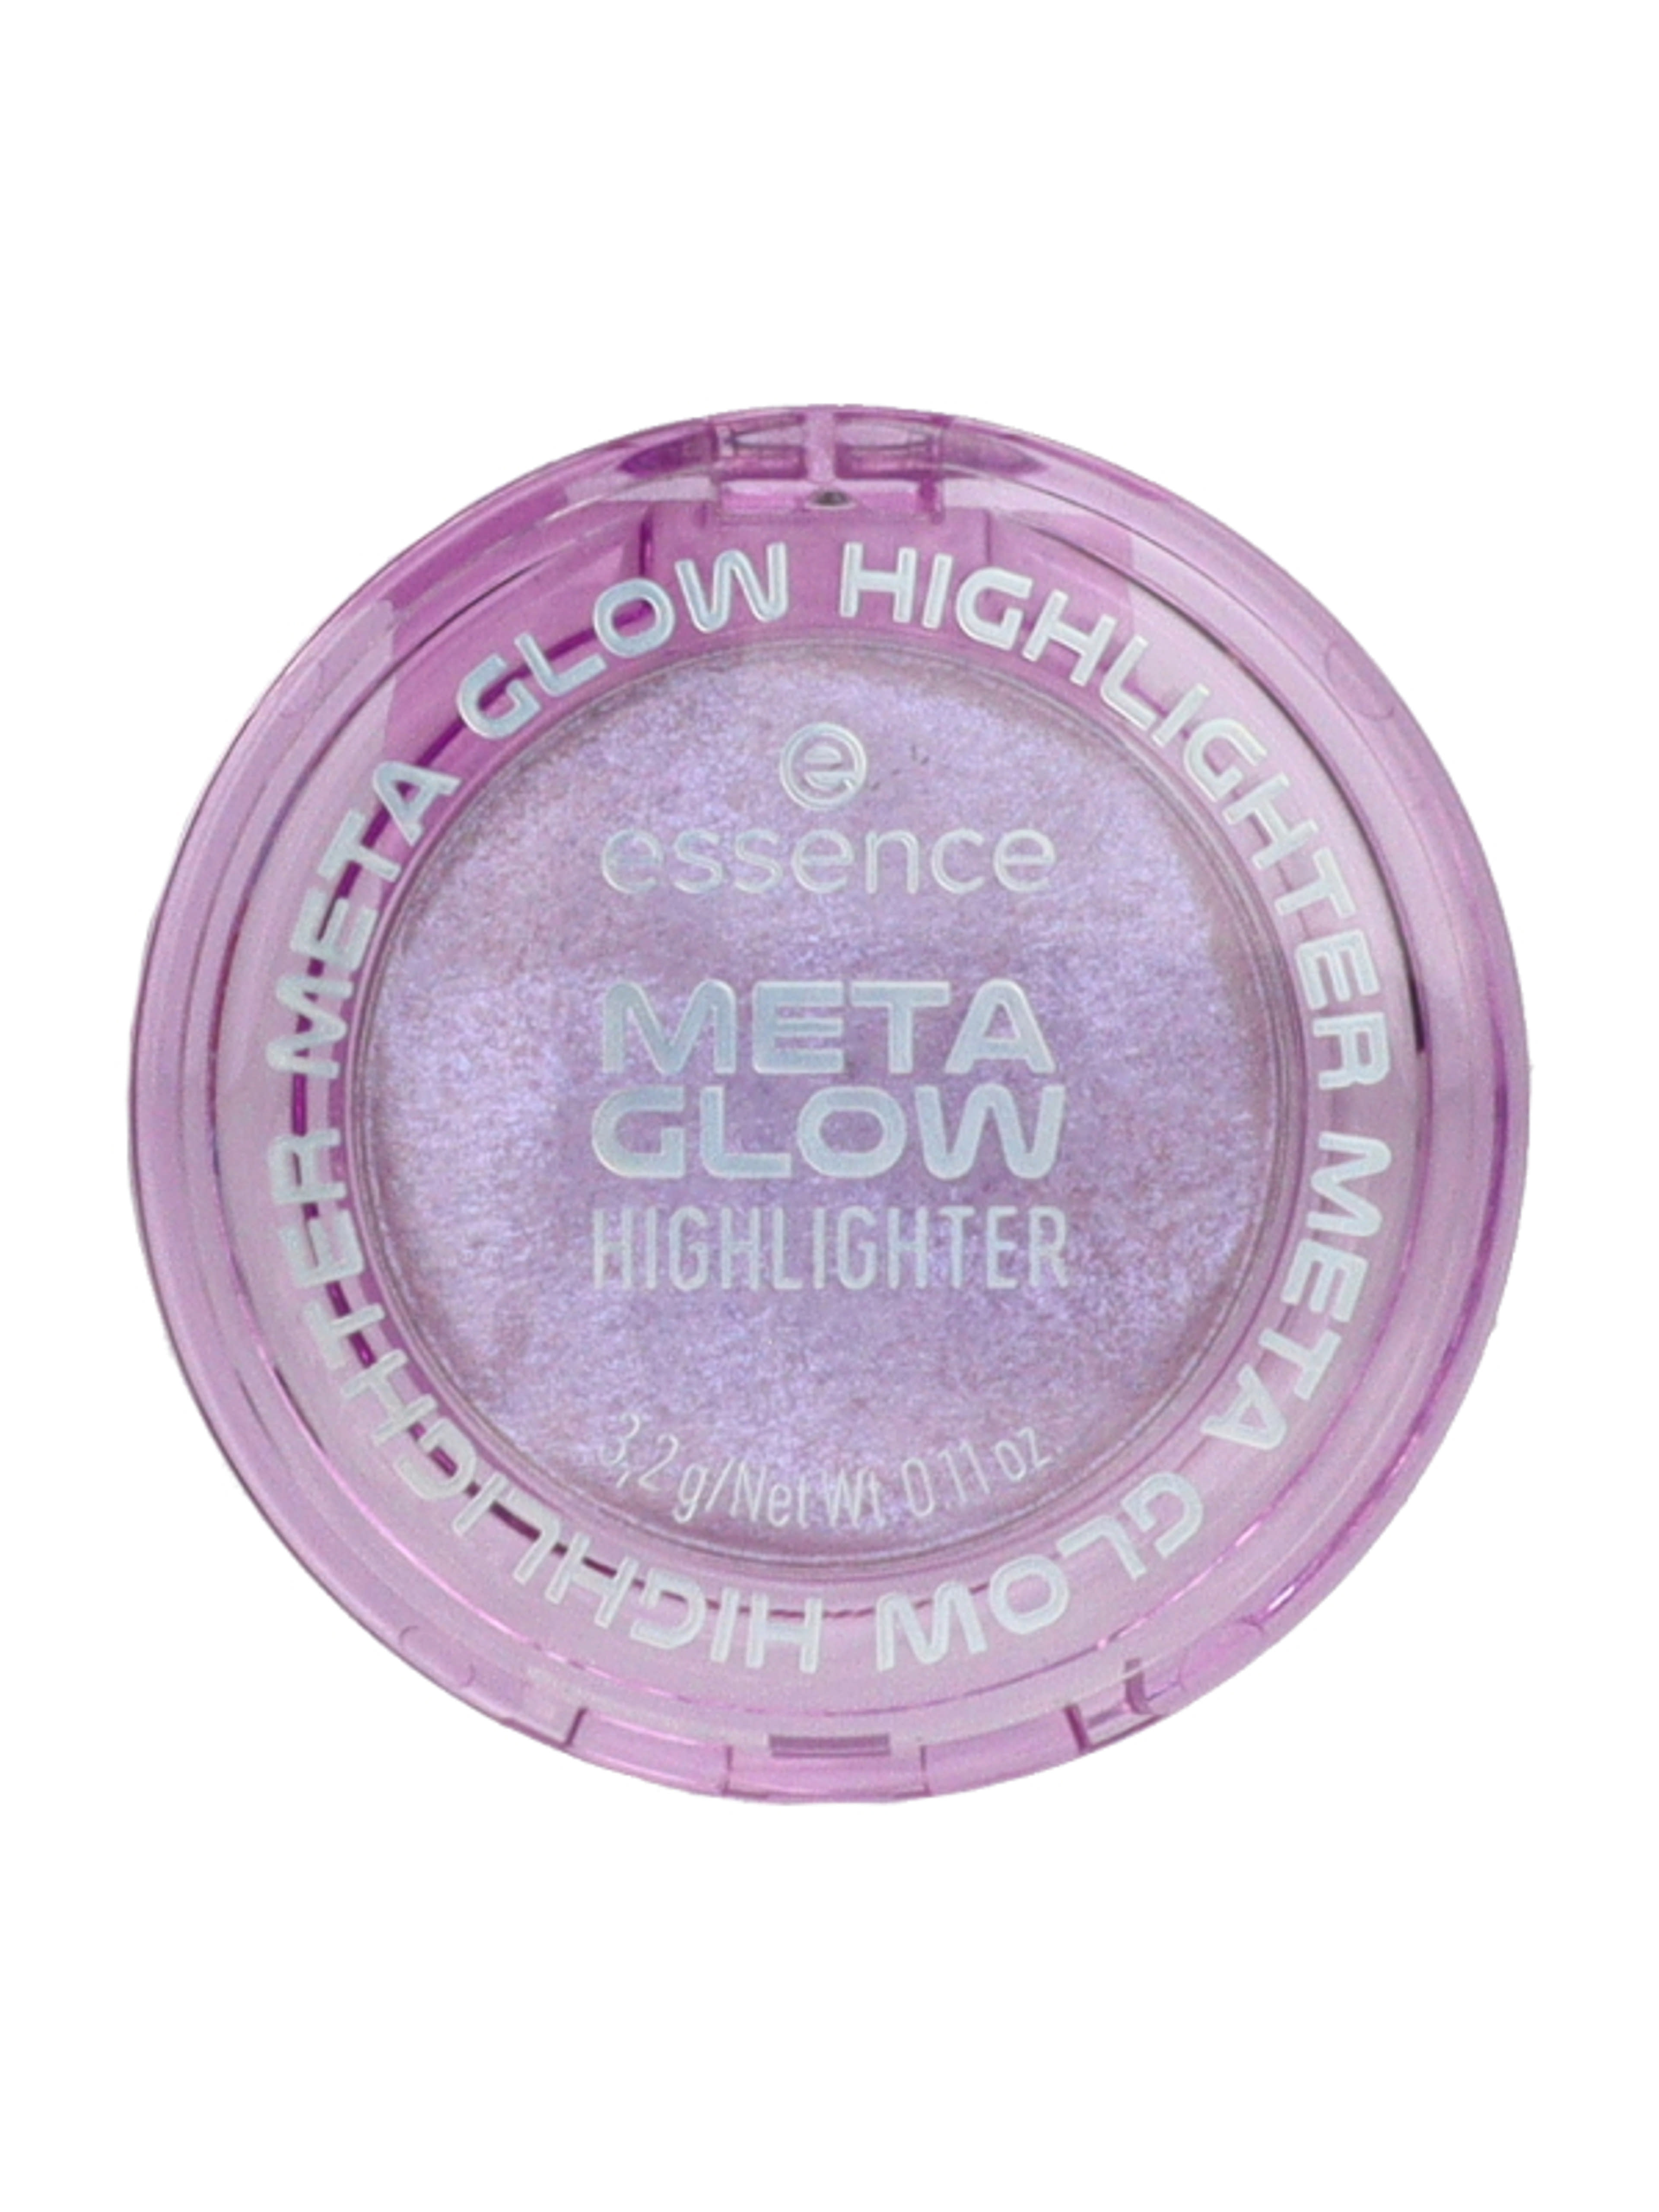 Essence Meta Glow highlighter - 1 db